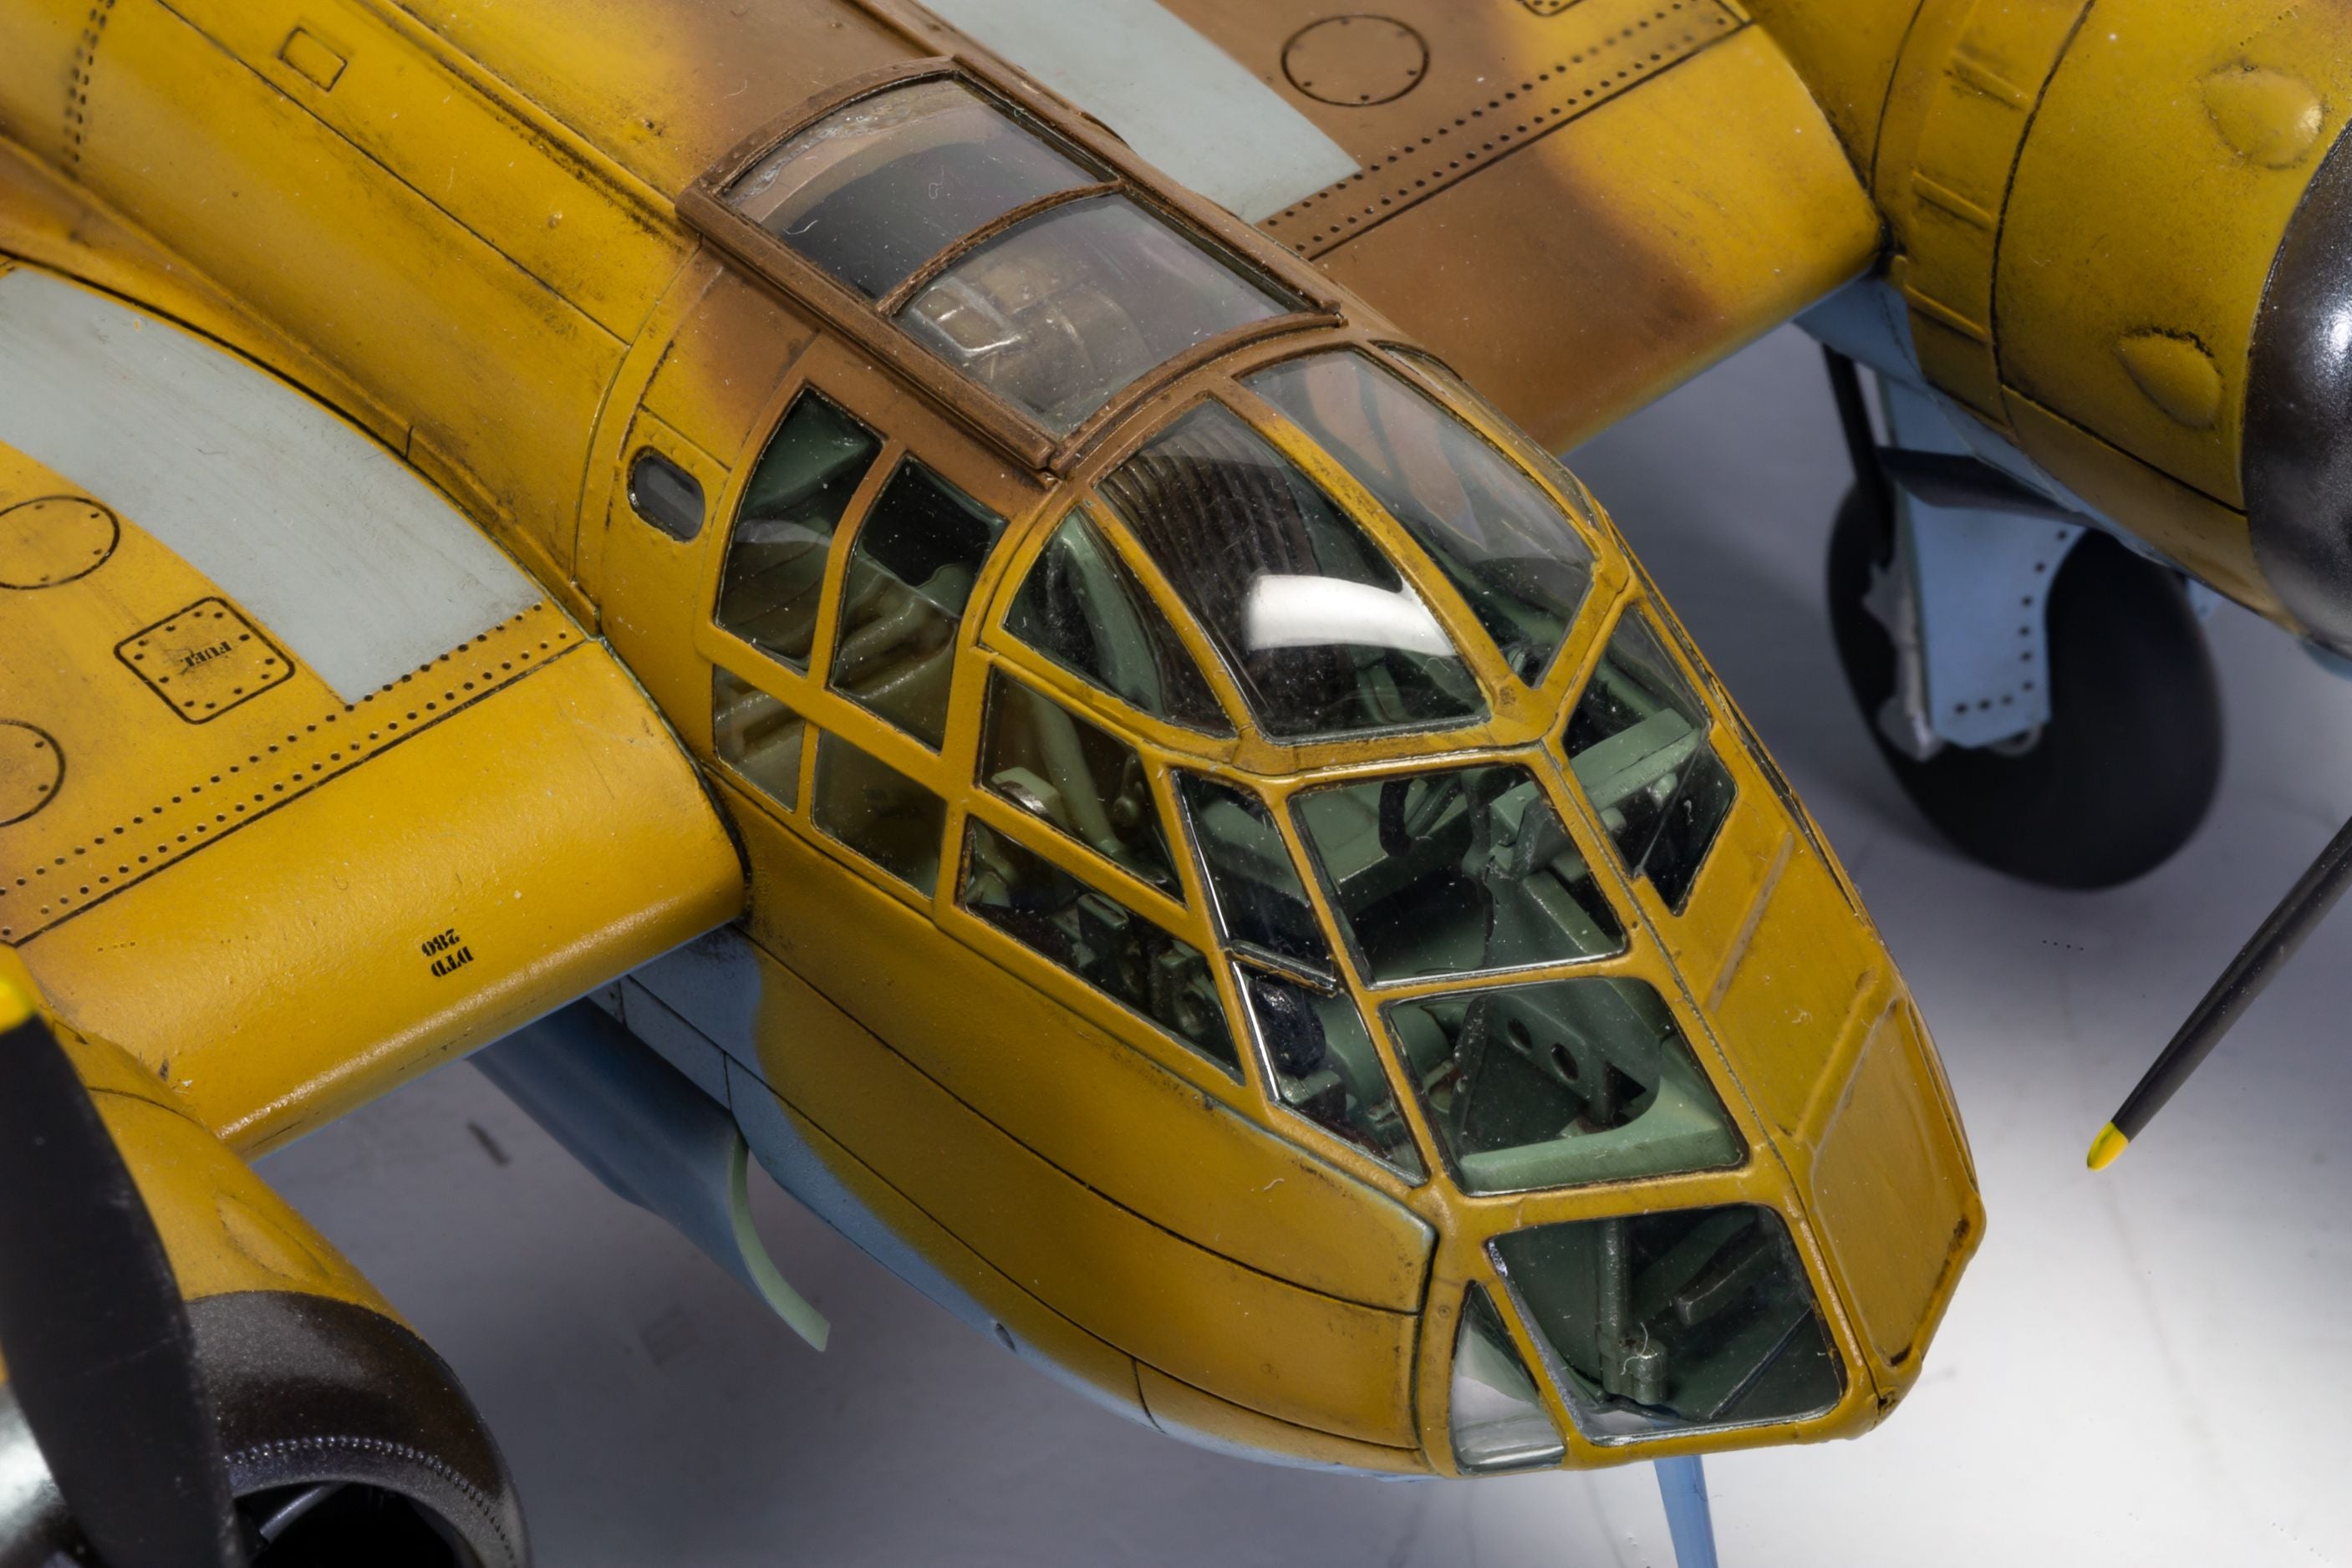 Bristol Blenheim Mk1 (1:48) - Loaded Dice